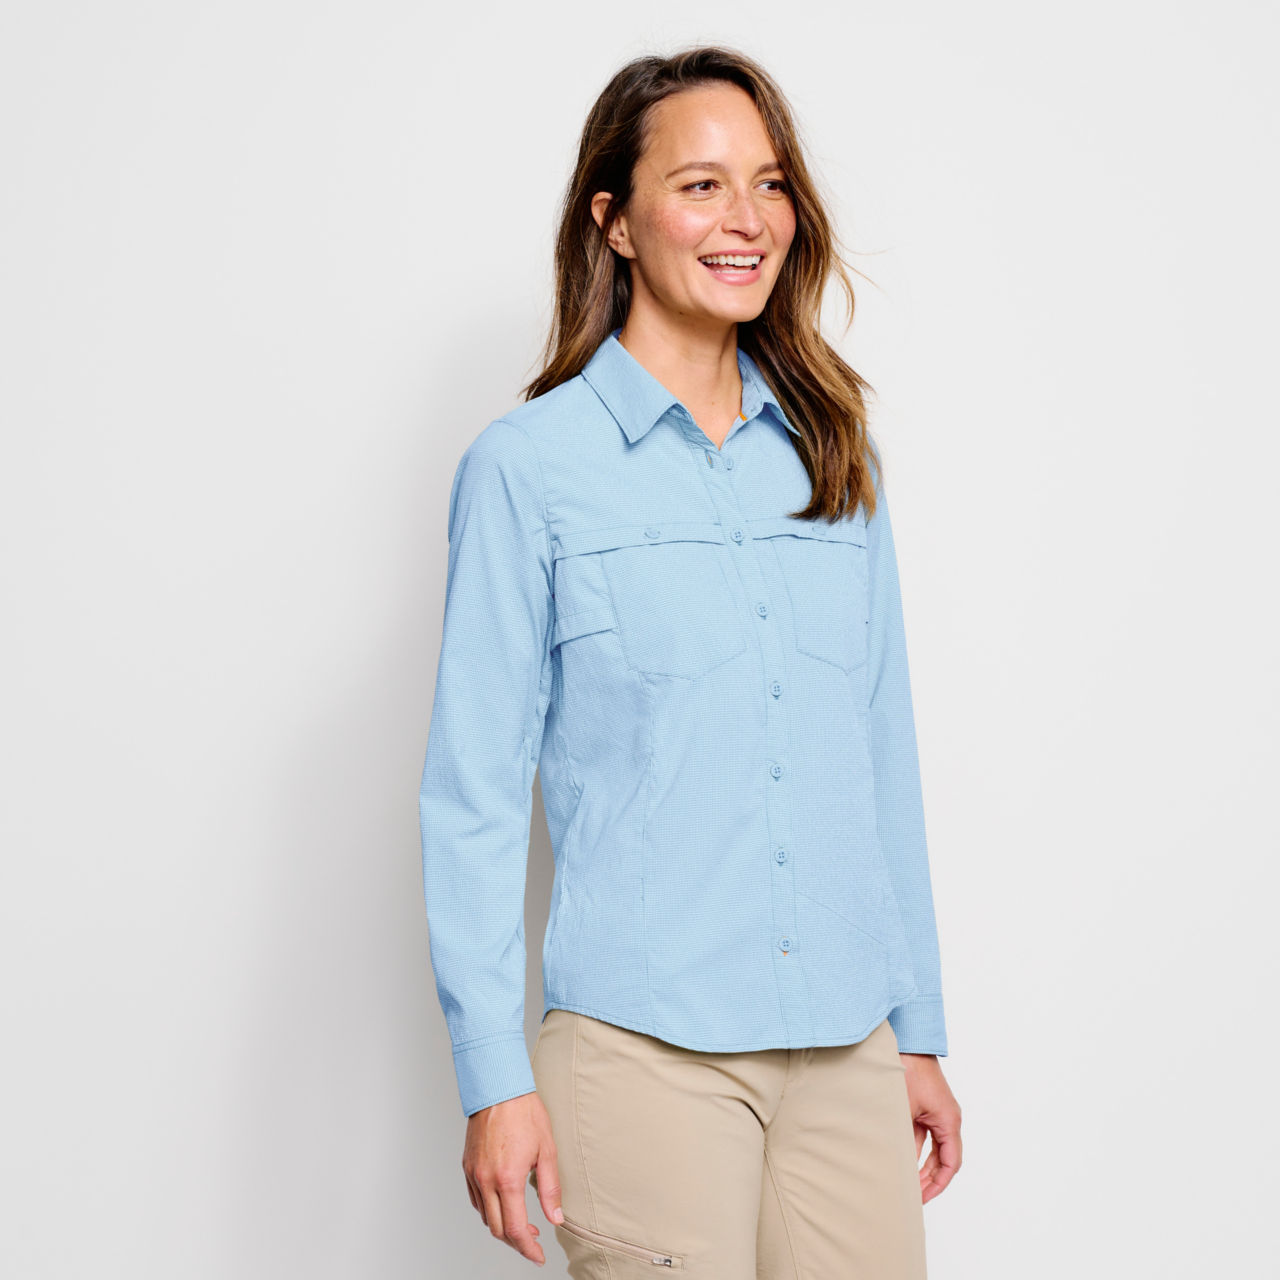 Women’s Open Air Caster Long-Sleeved Shirt - CLOUD BLUE image number 1